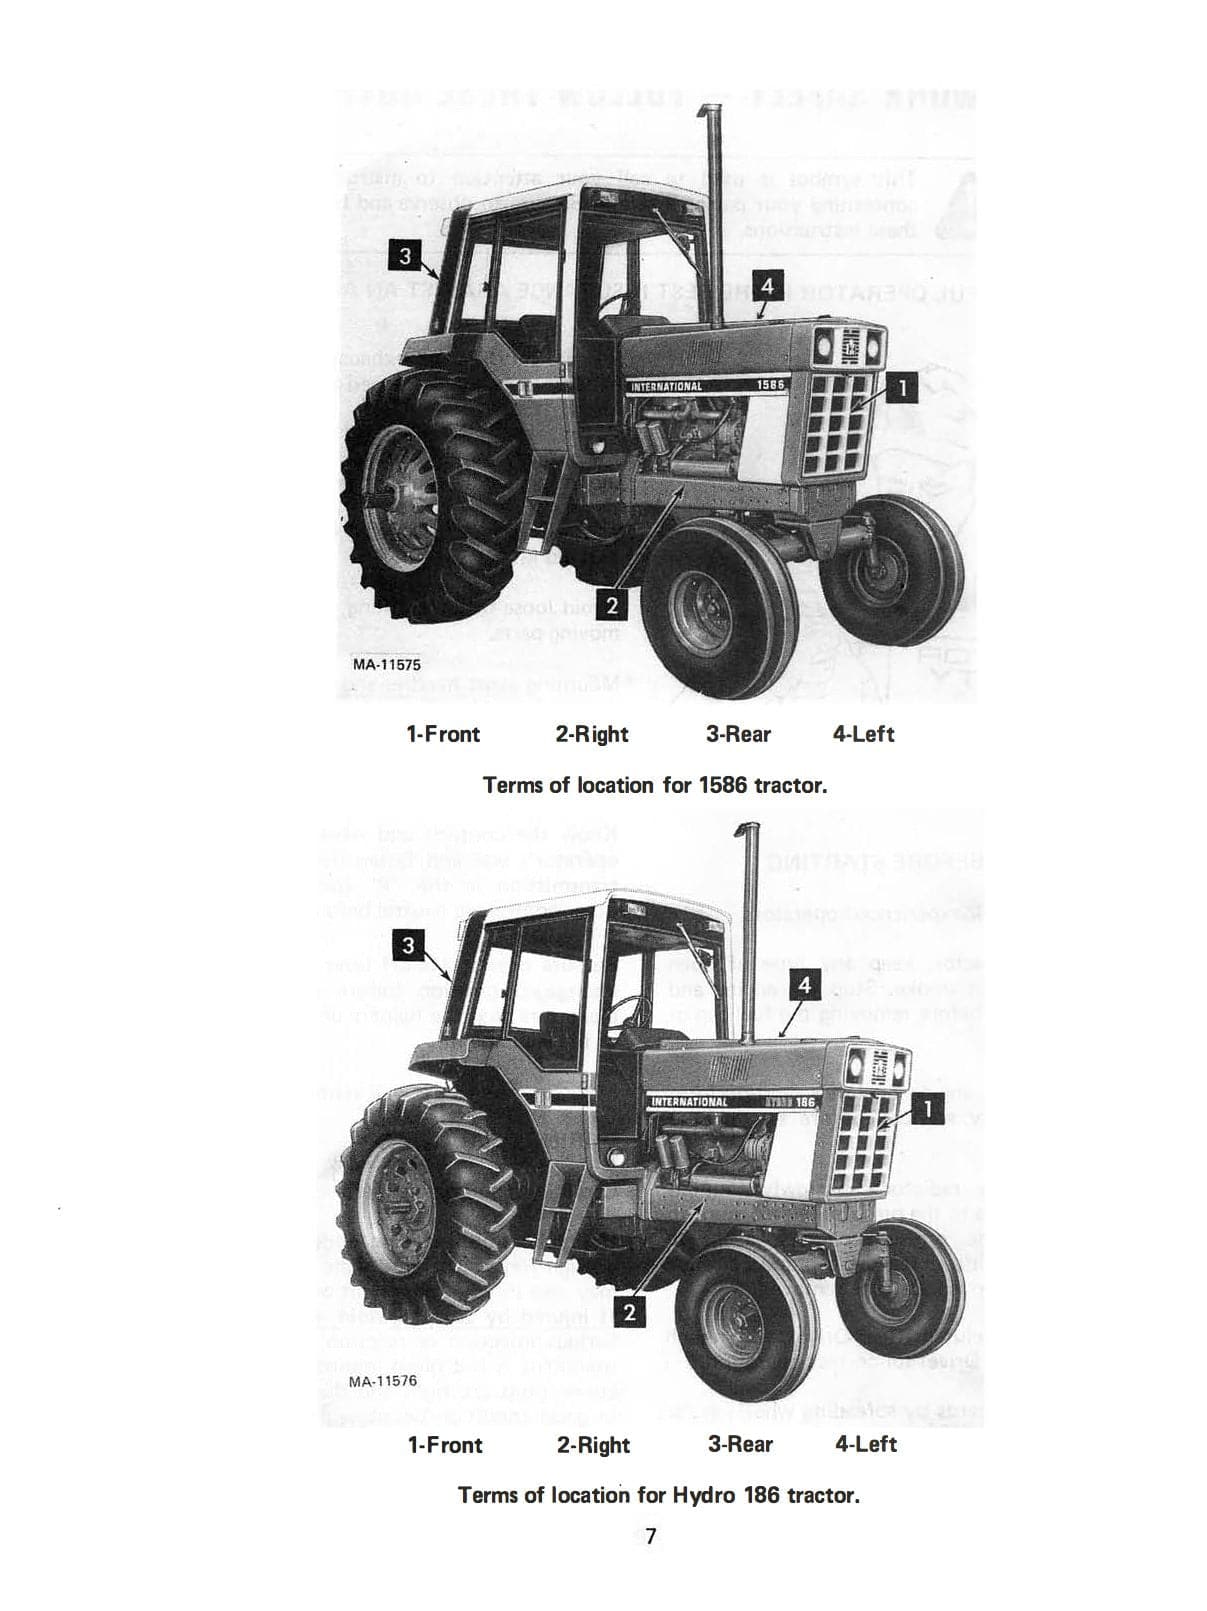 INTERNATIONAL 886, 986, 1086, 1486, 1586, and HYDRO 186 TRACTORS - Operator's Manual - Ag Manuals - A Provider of Digital Farm Manuals - 2